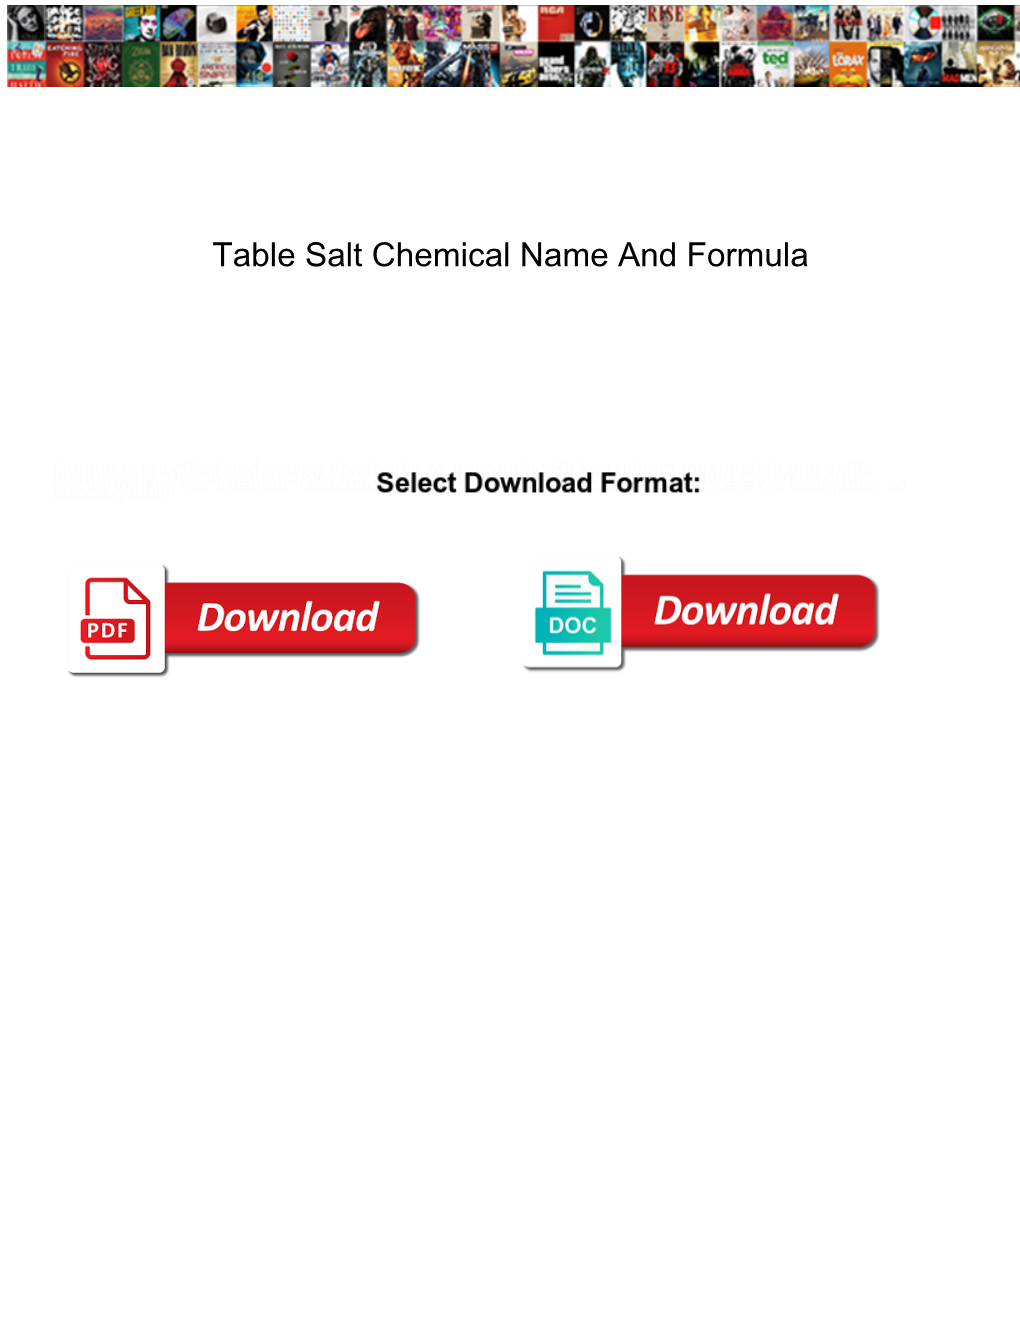 Table Salt Chemical Name and Formula